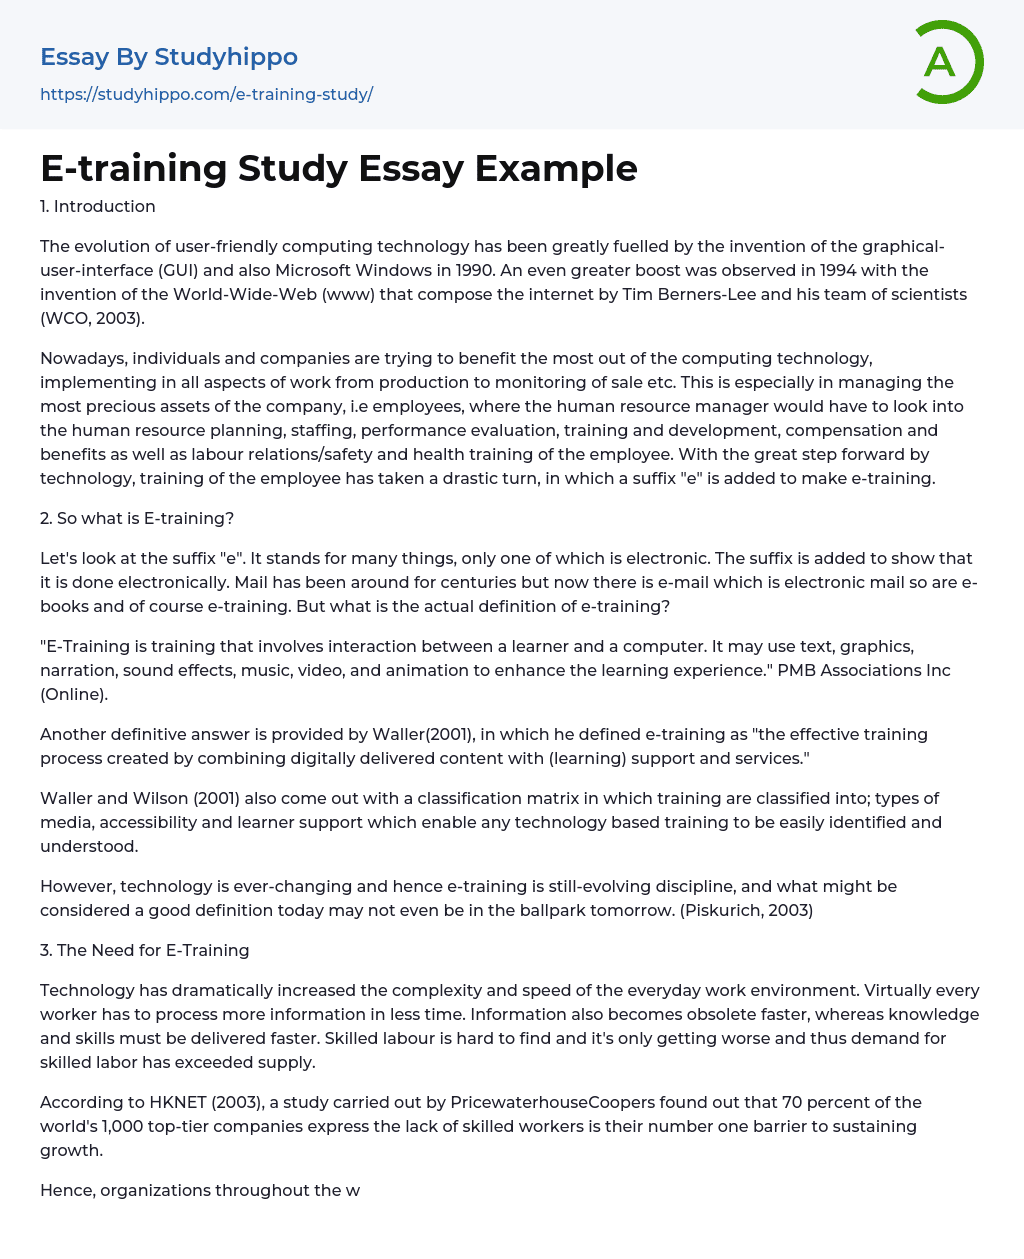 E-training Study Essay Example